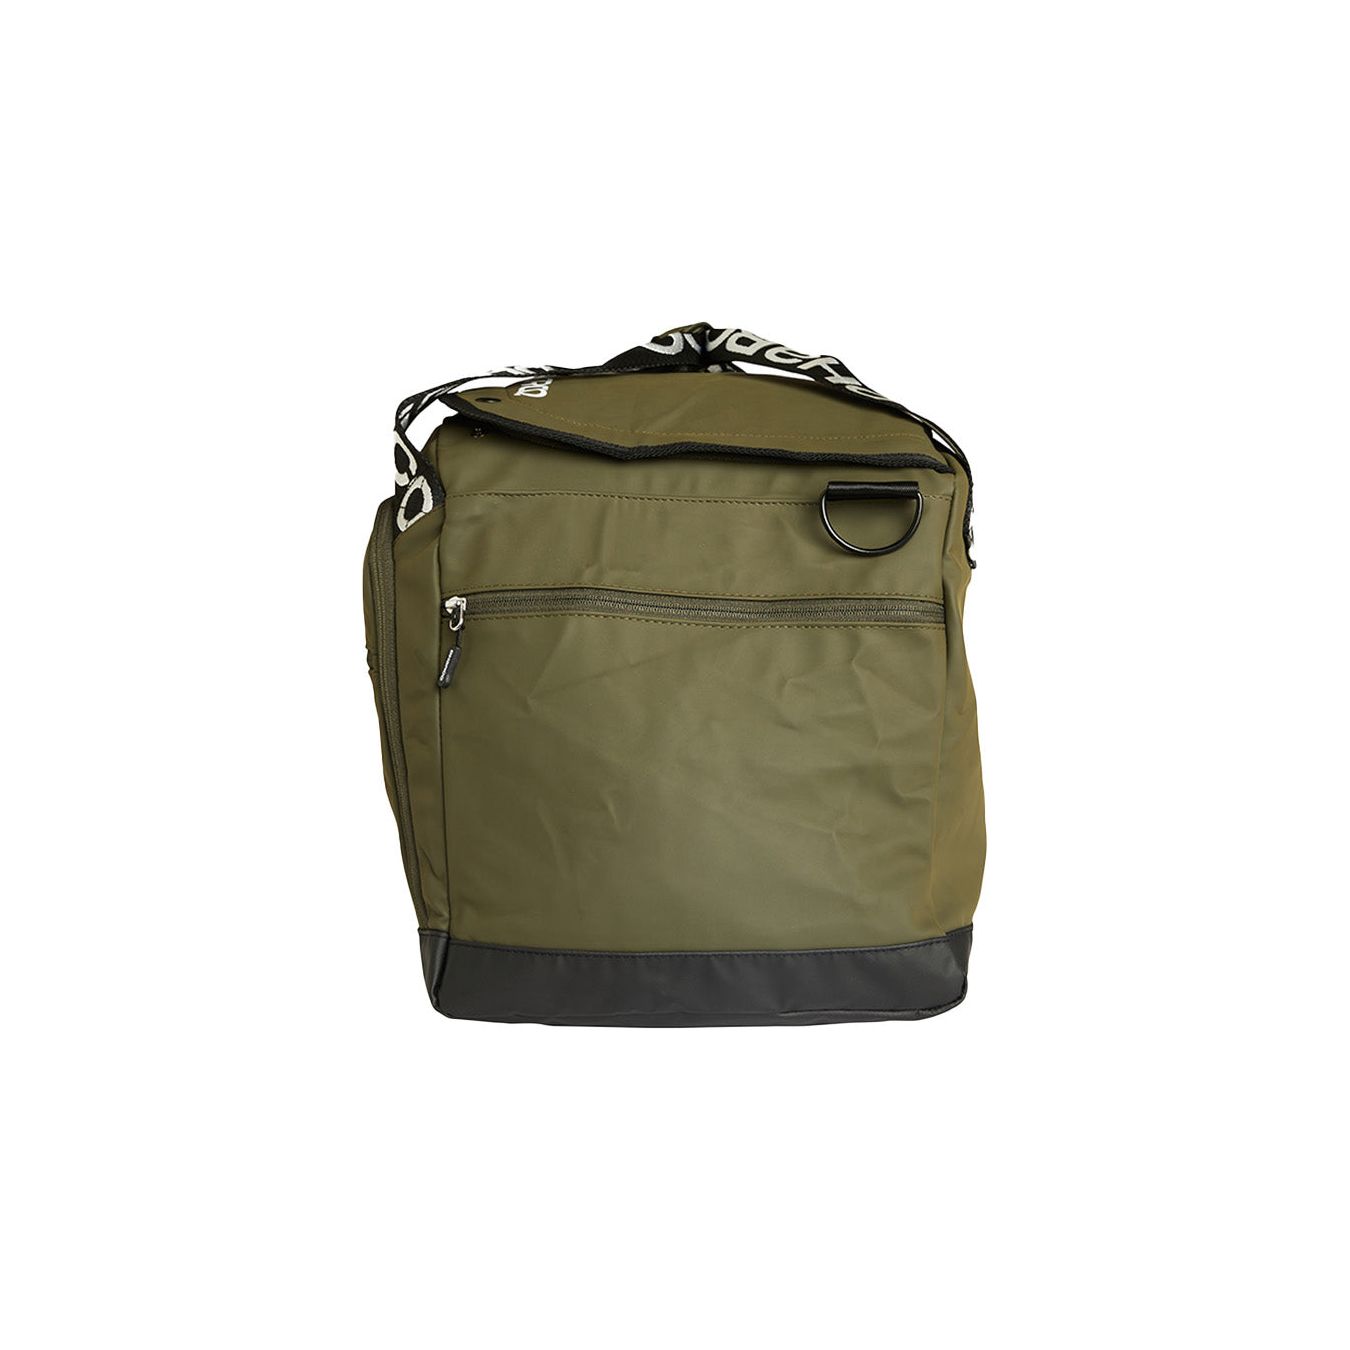 DHaRCO 50L Duffle Bag - Camo